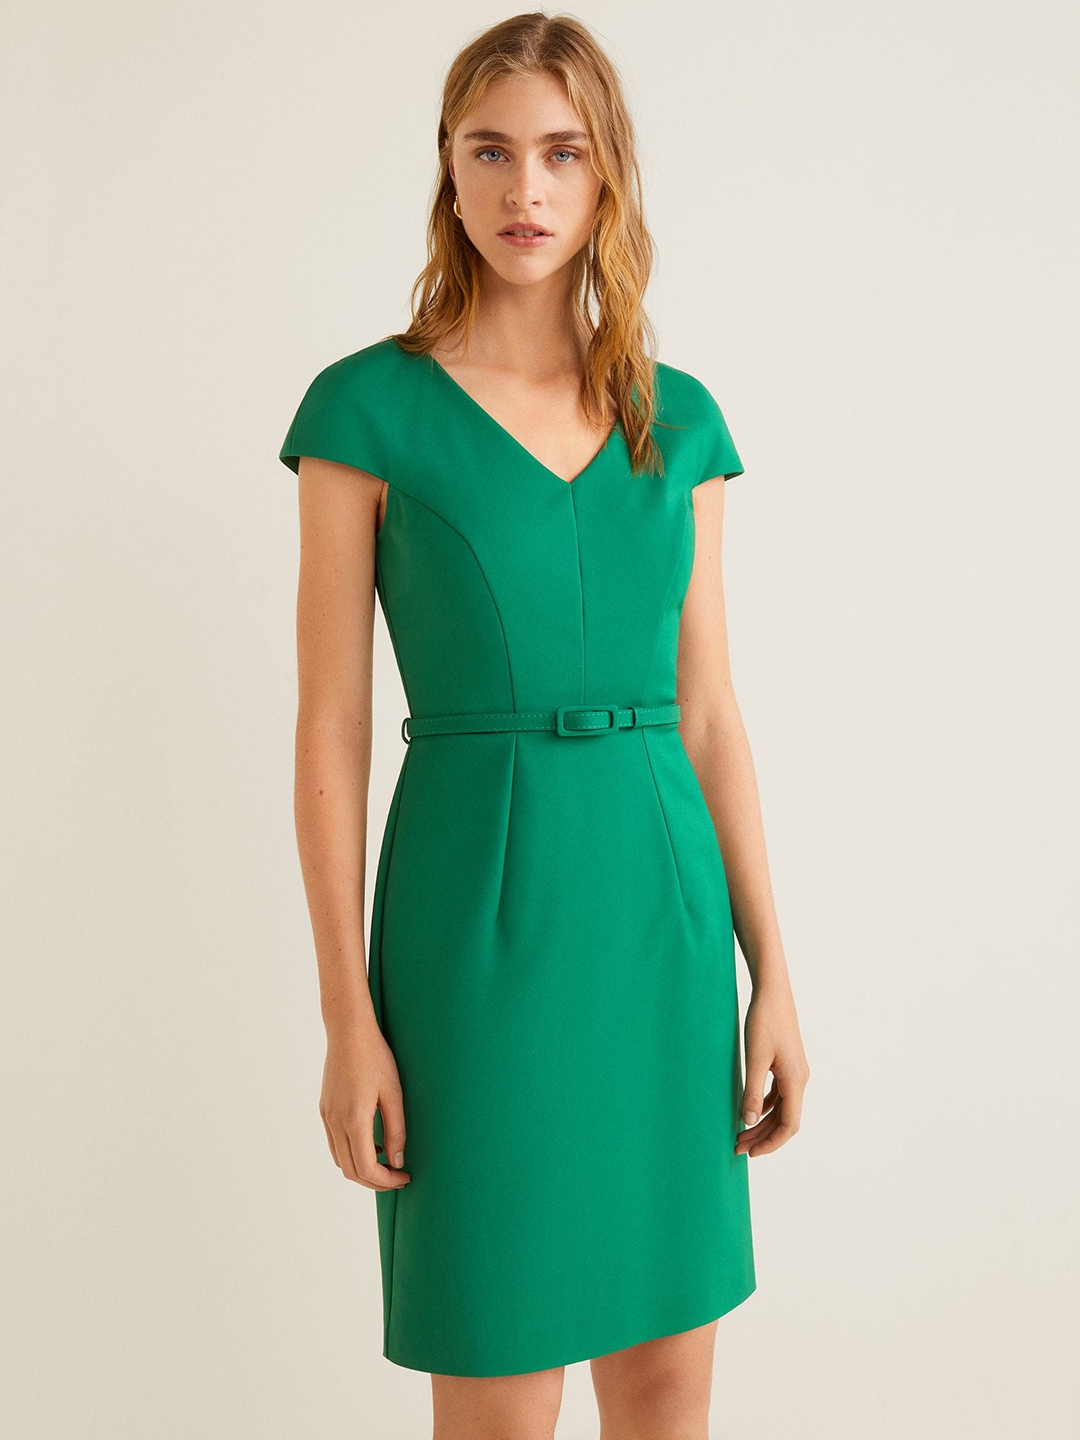 mango green dress 2019